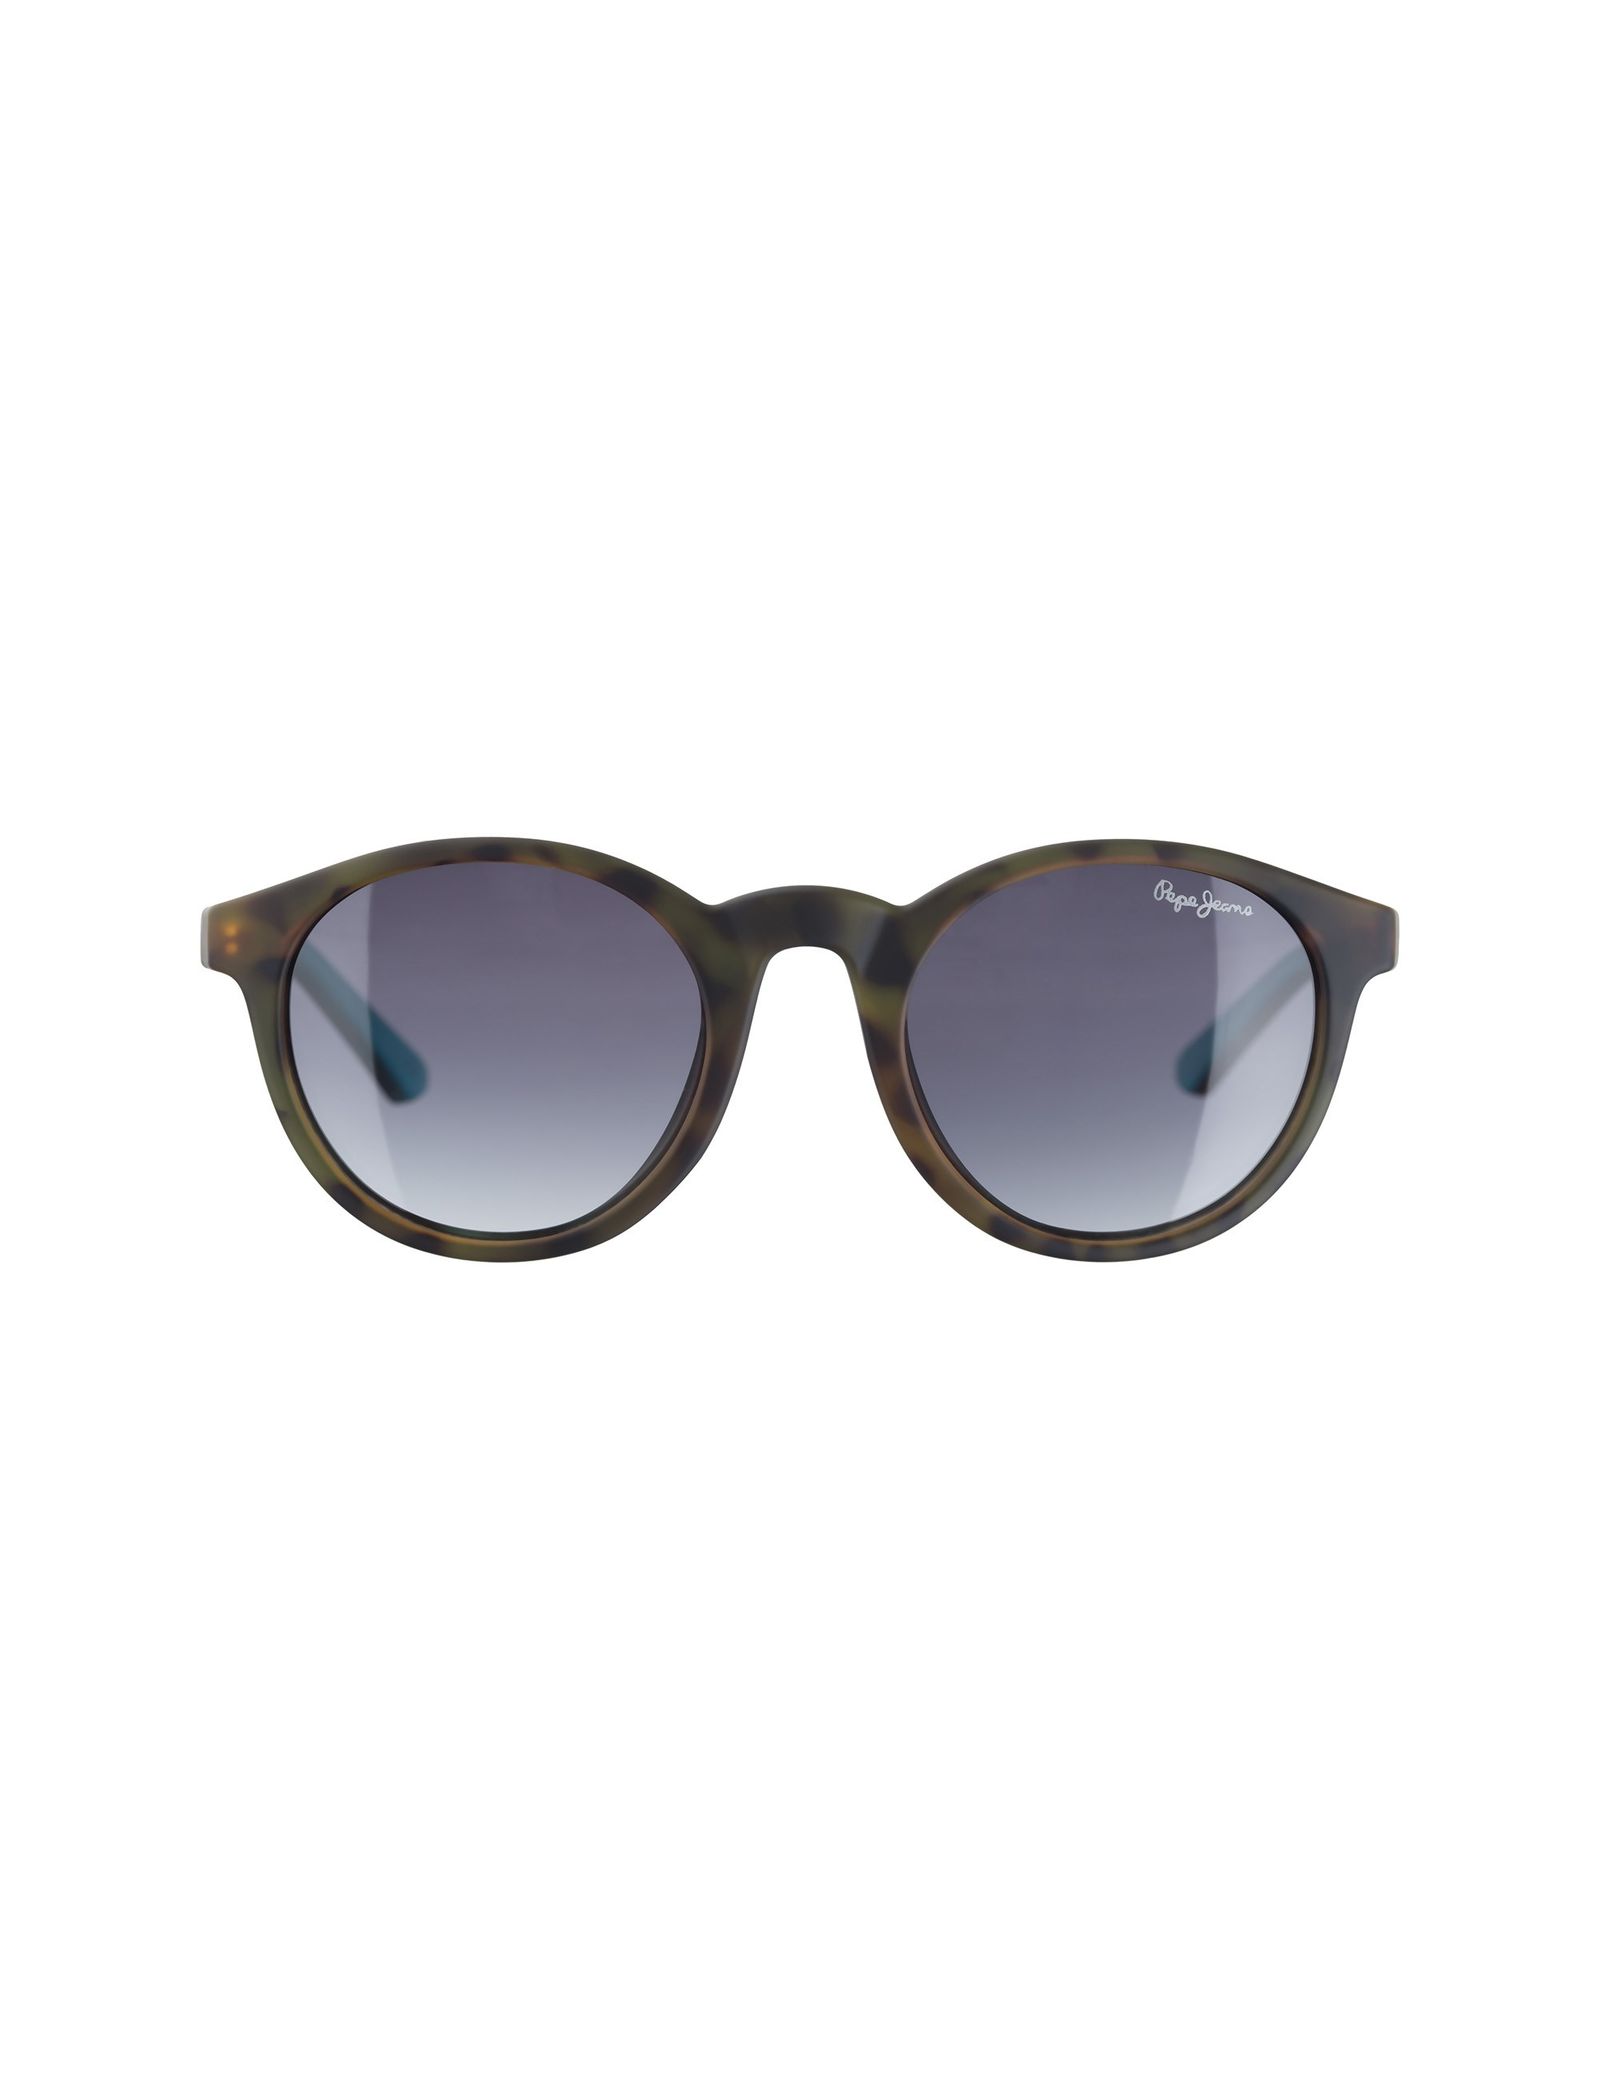 عینک آفتابی پنتوس بچگانه - پپه جینز - قهوه اي - 2